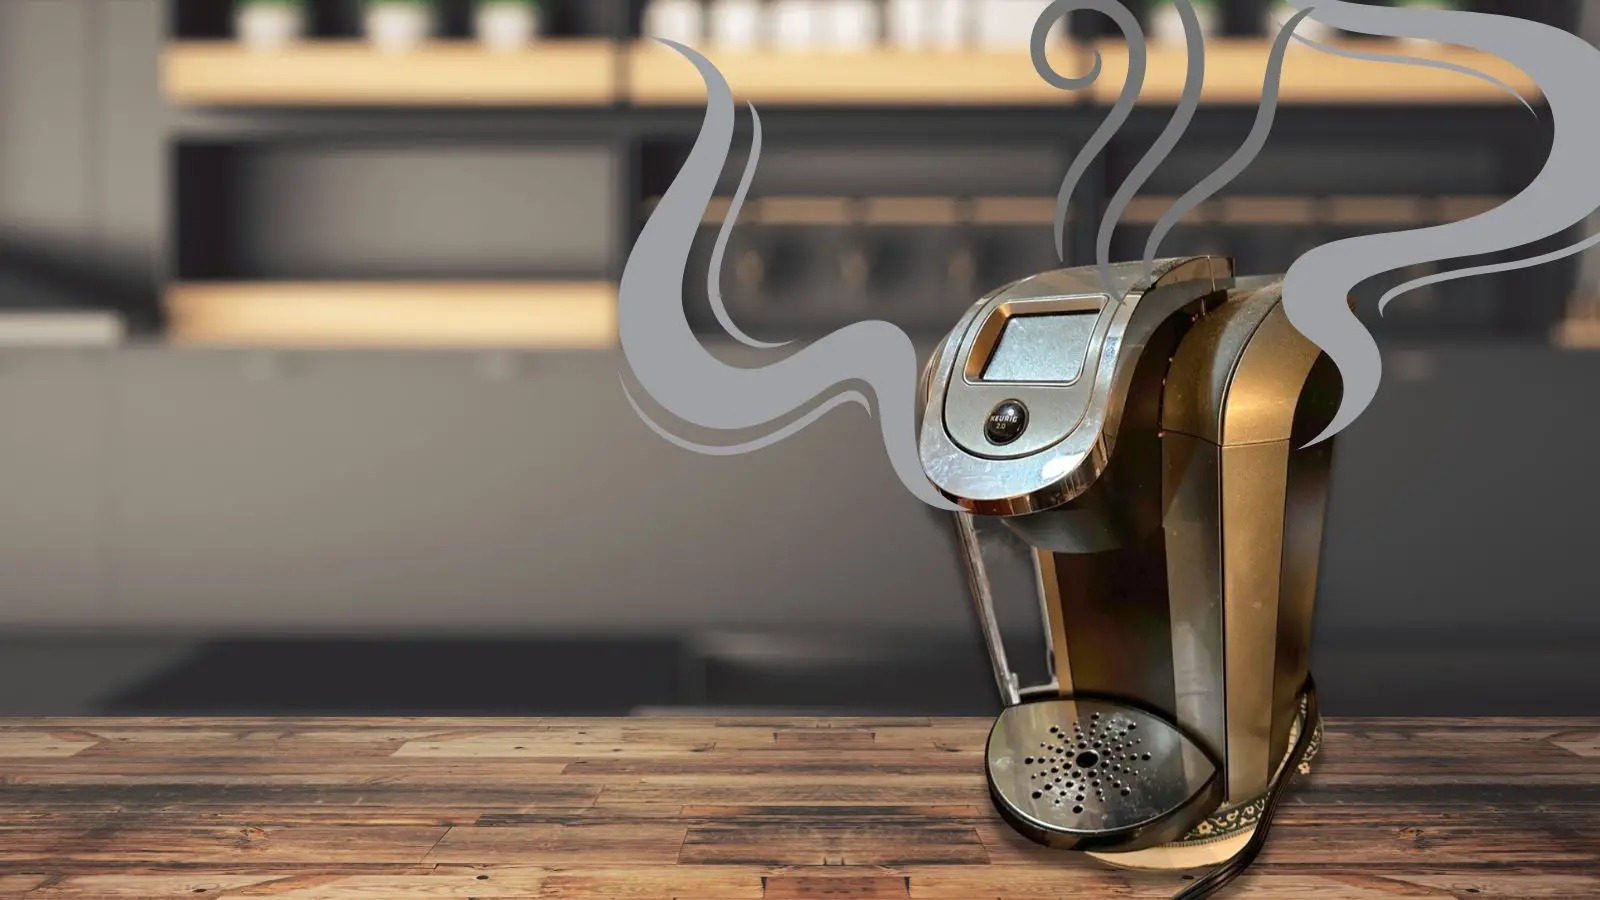 coffee maker burning smell smoke - familyguidecentral.com